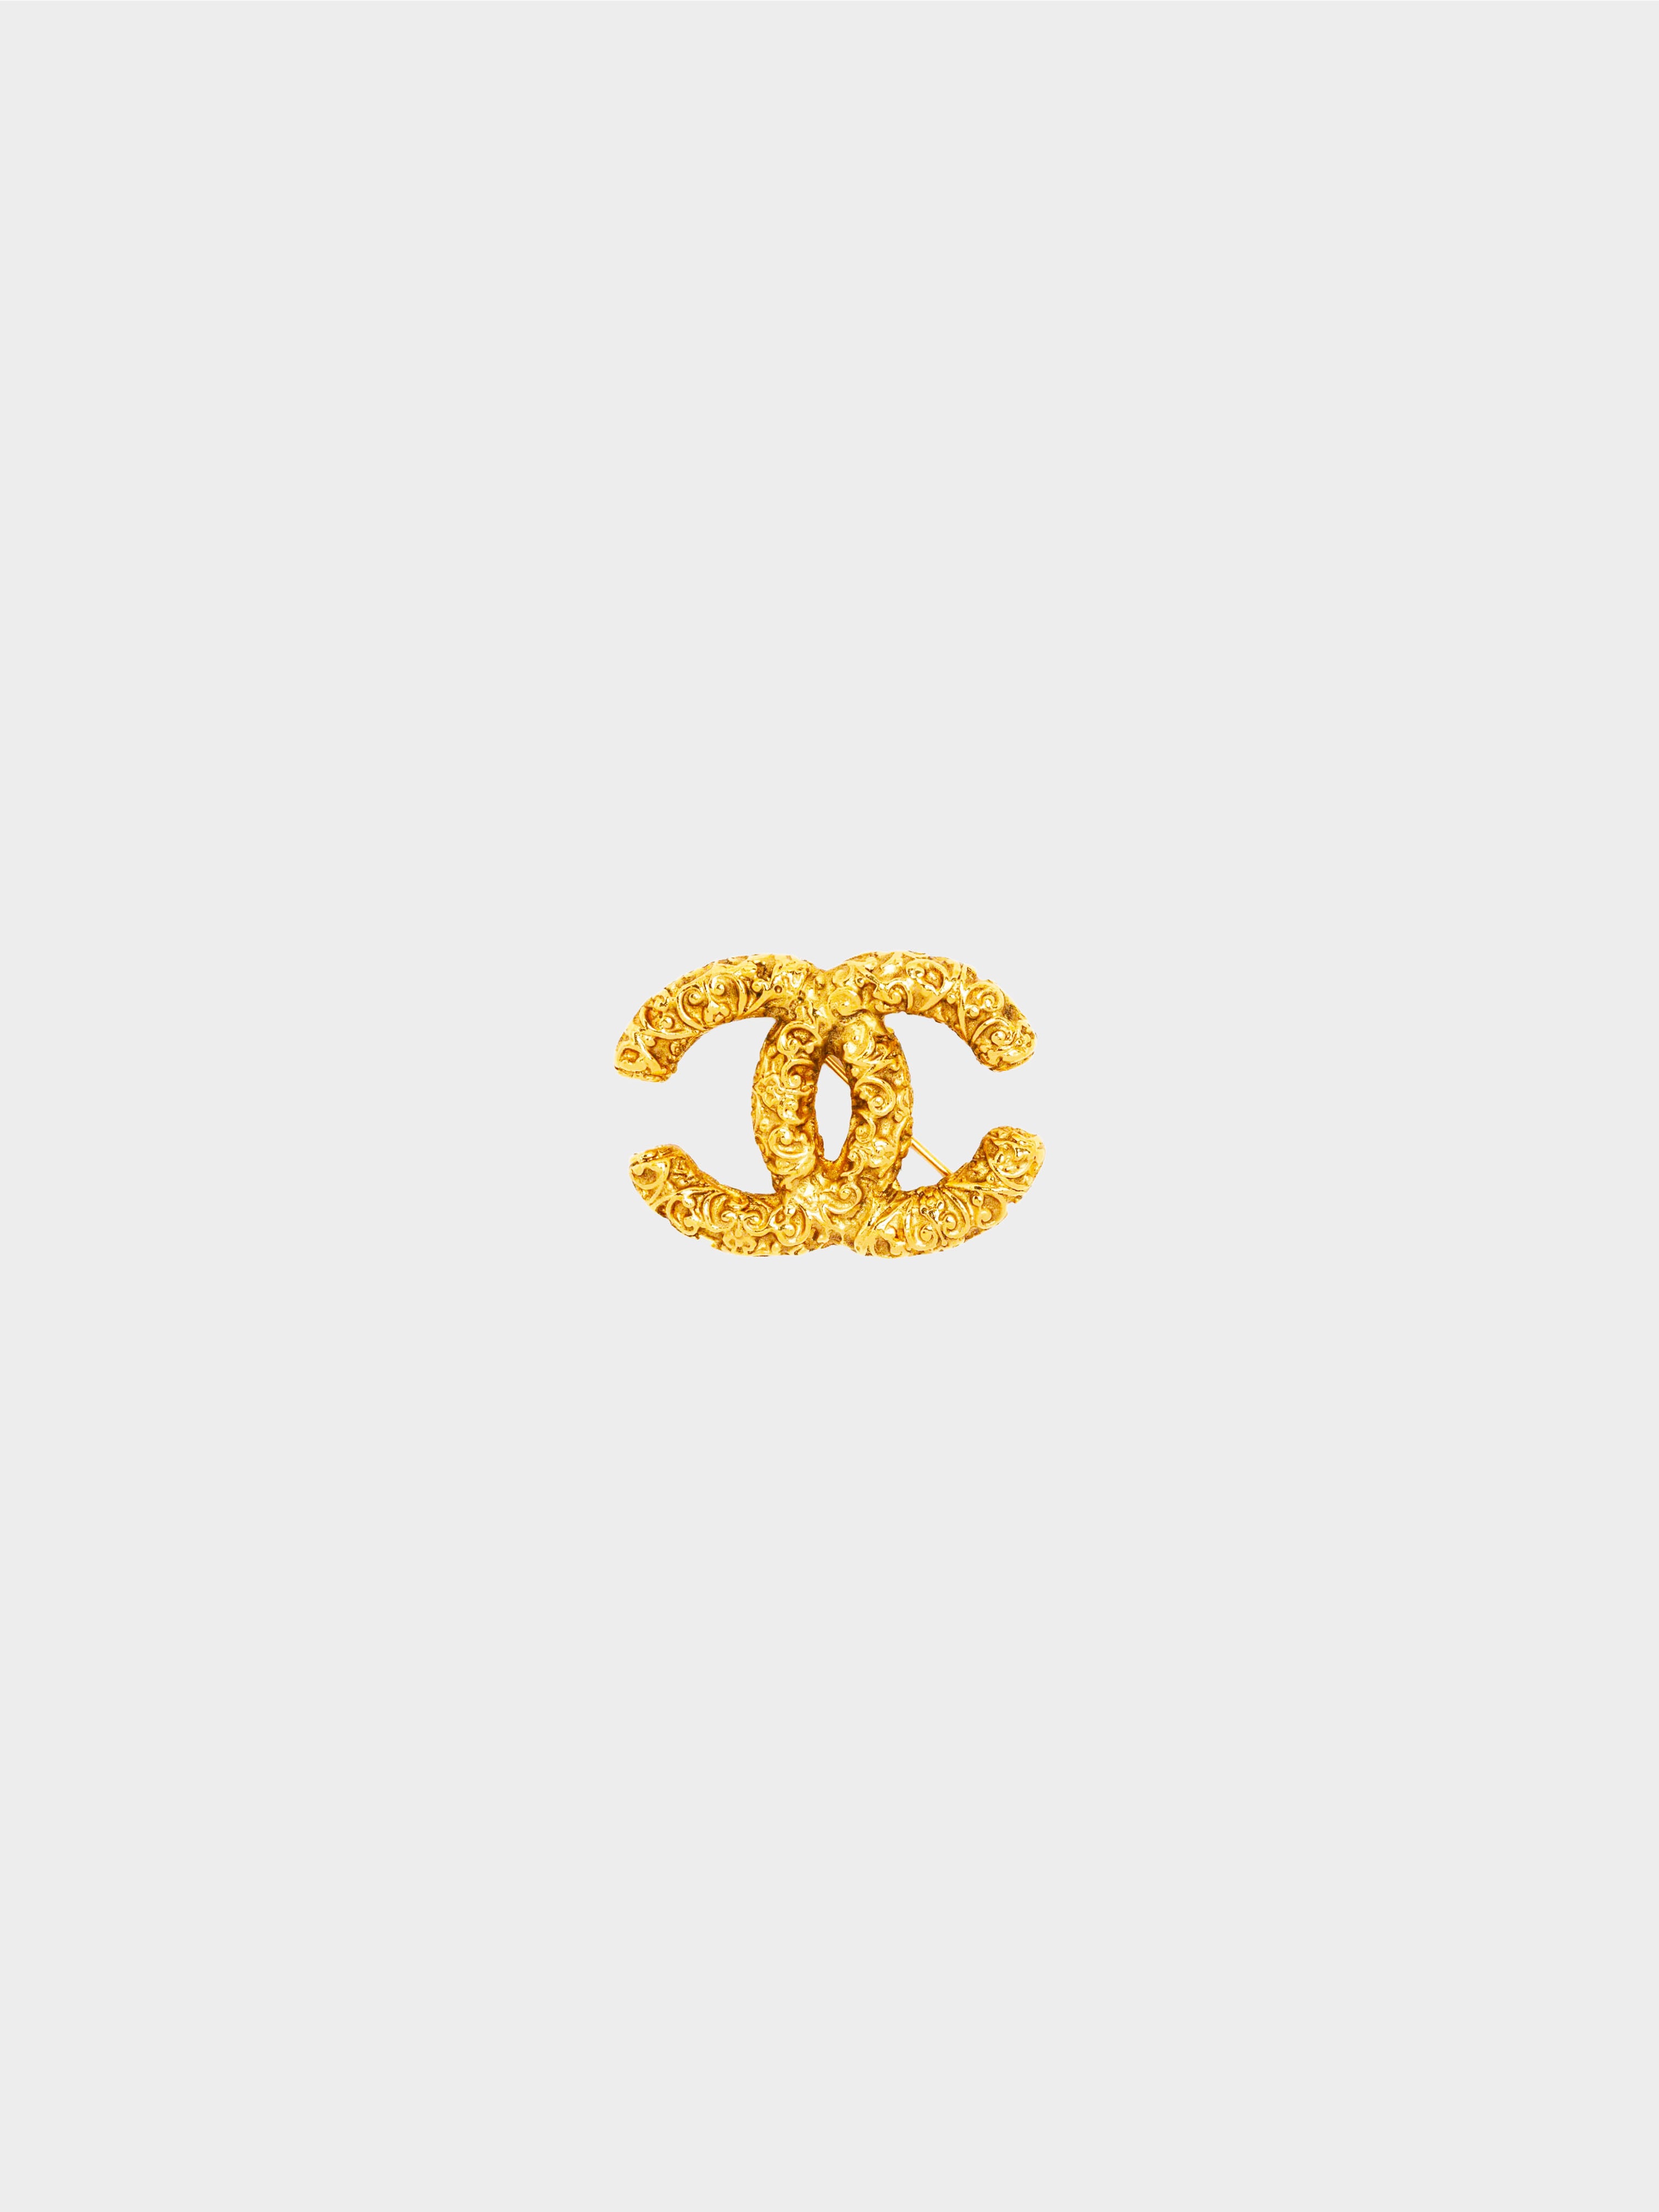 Chanel 1993 Vintage Gold Baroque Pattern Brooch